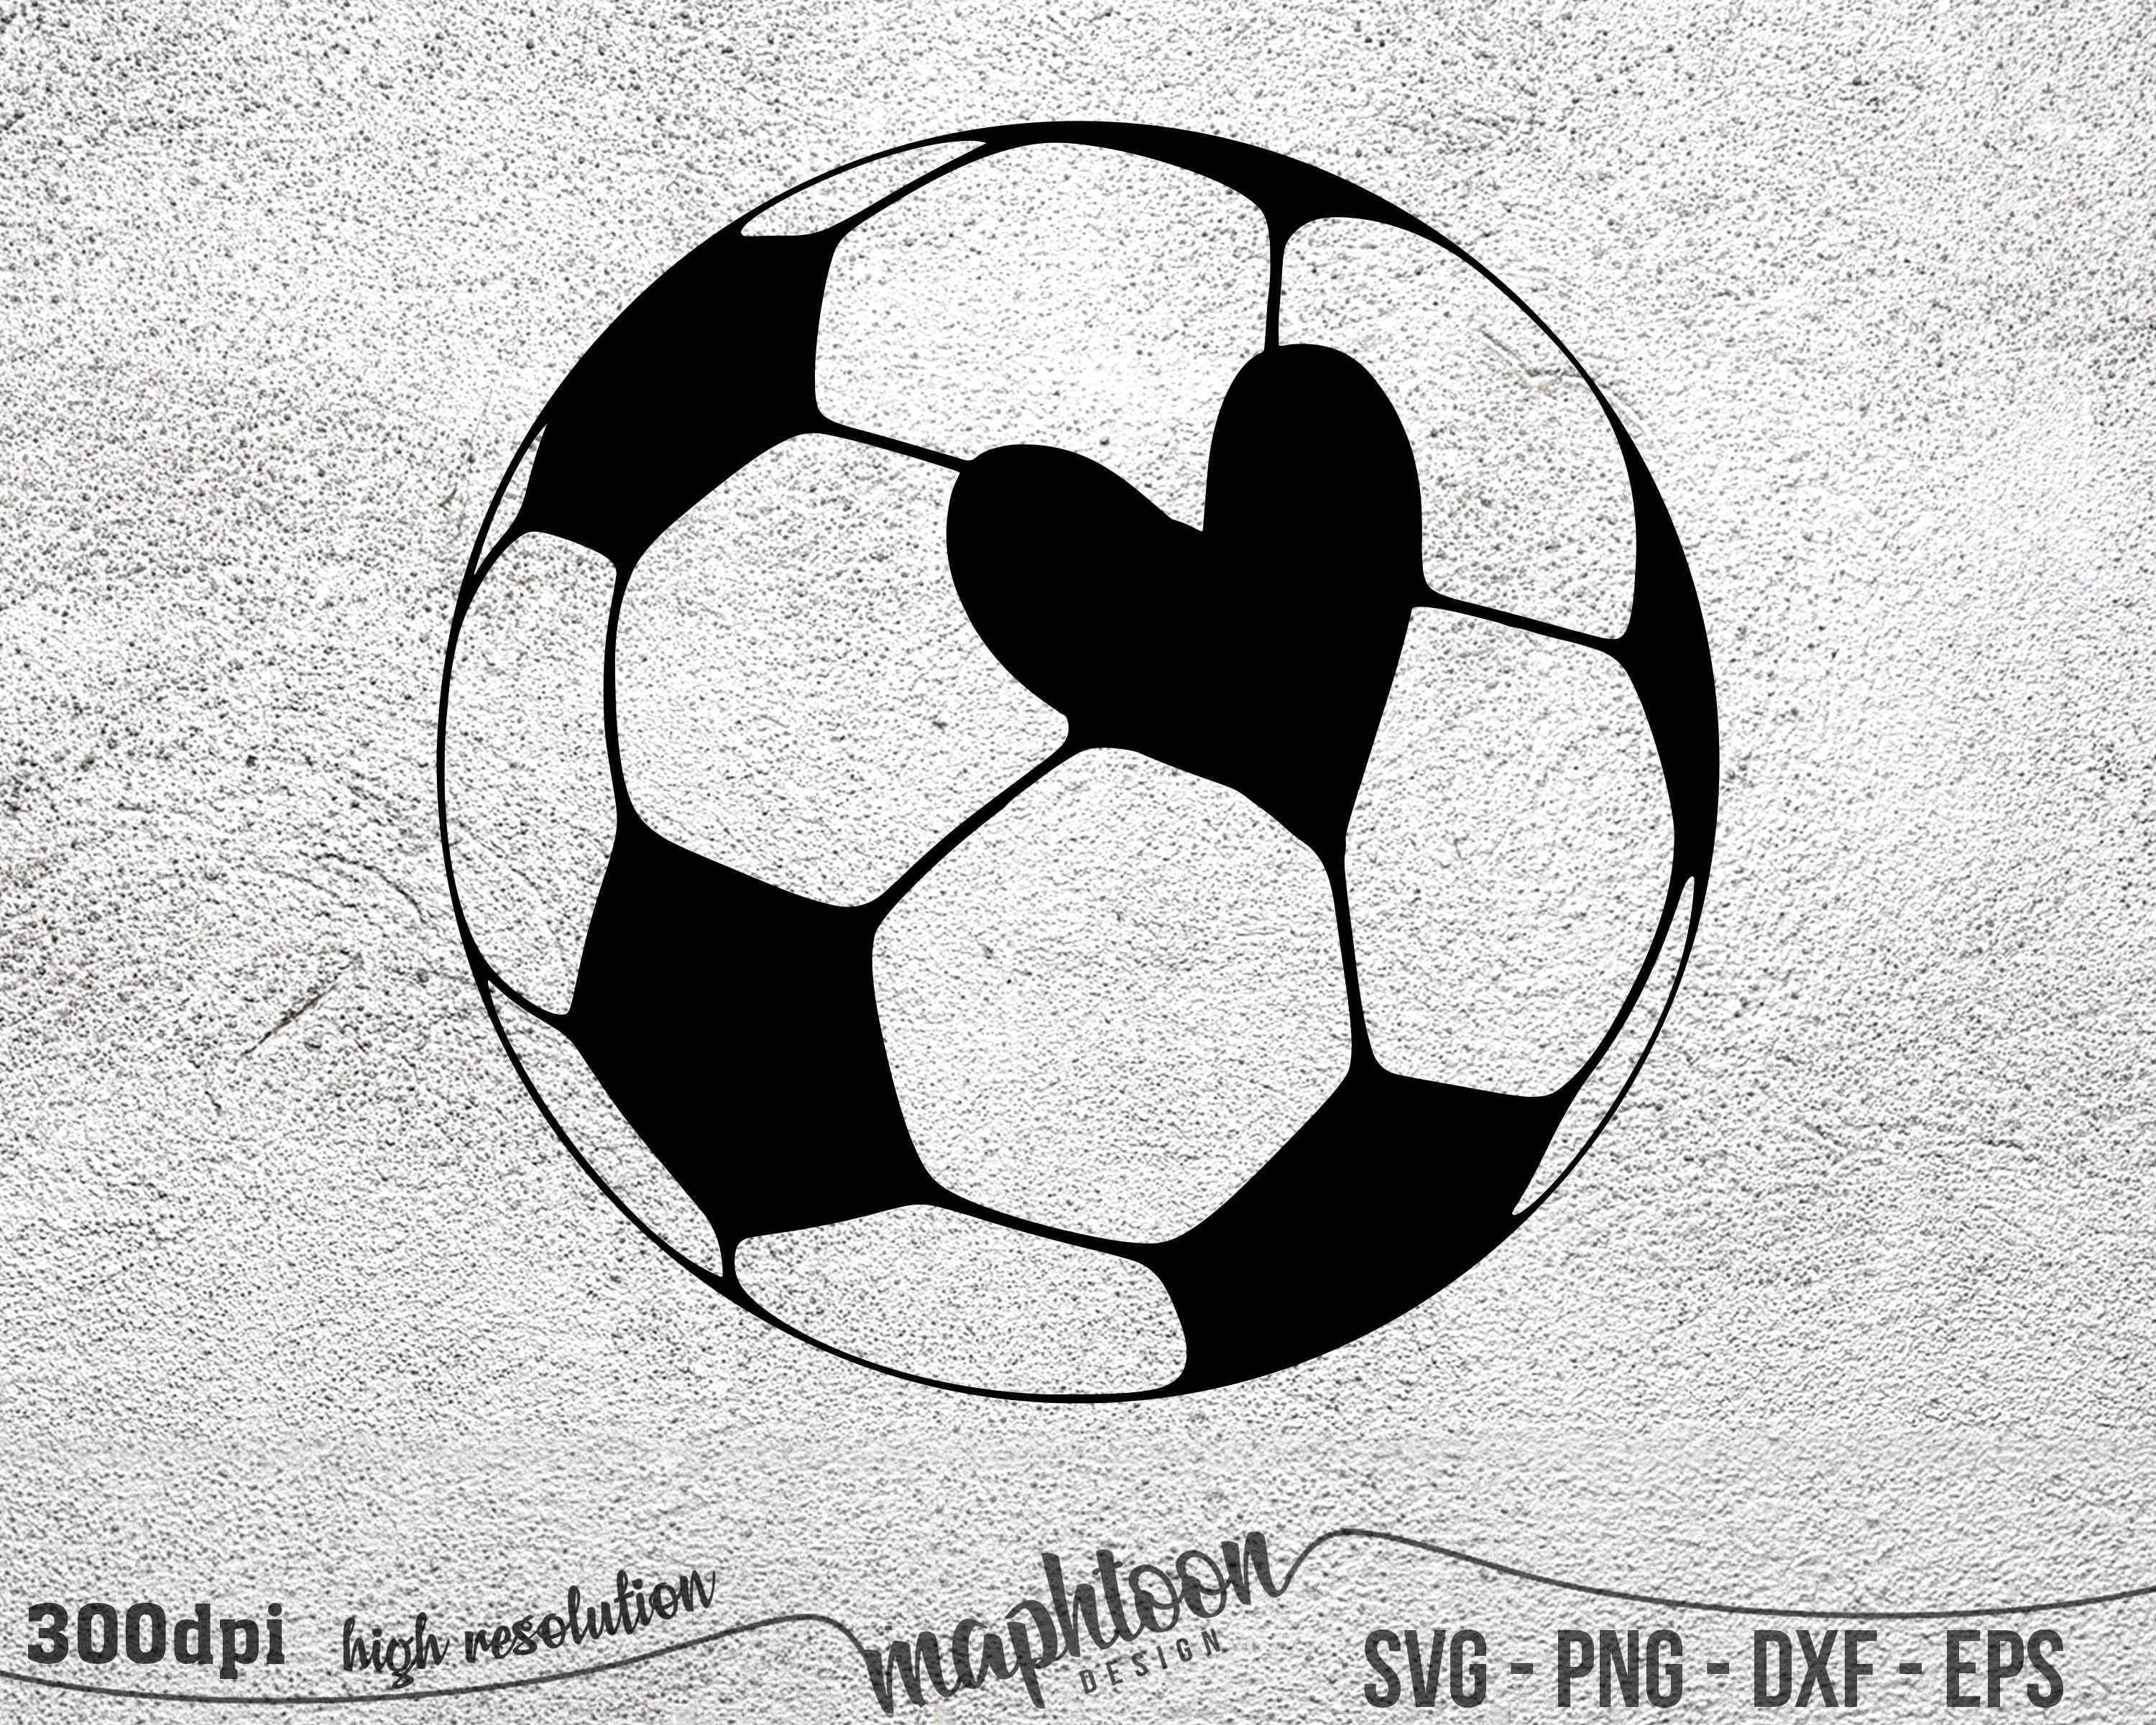 J'aime Le Football, Coeur Avec Ballon De Soccer Intérieur Design